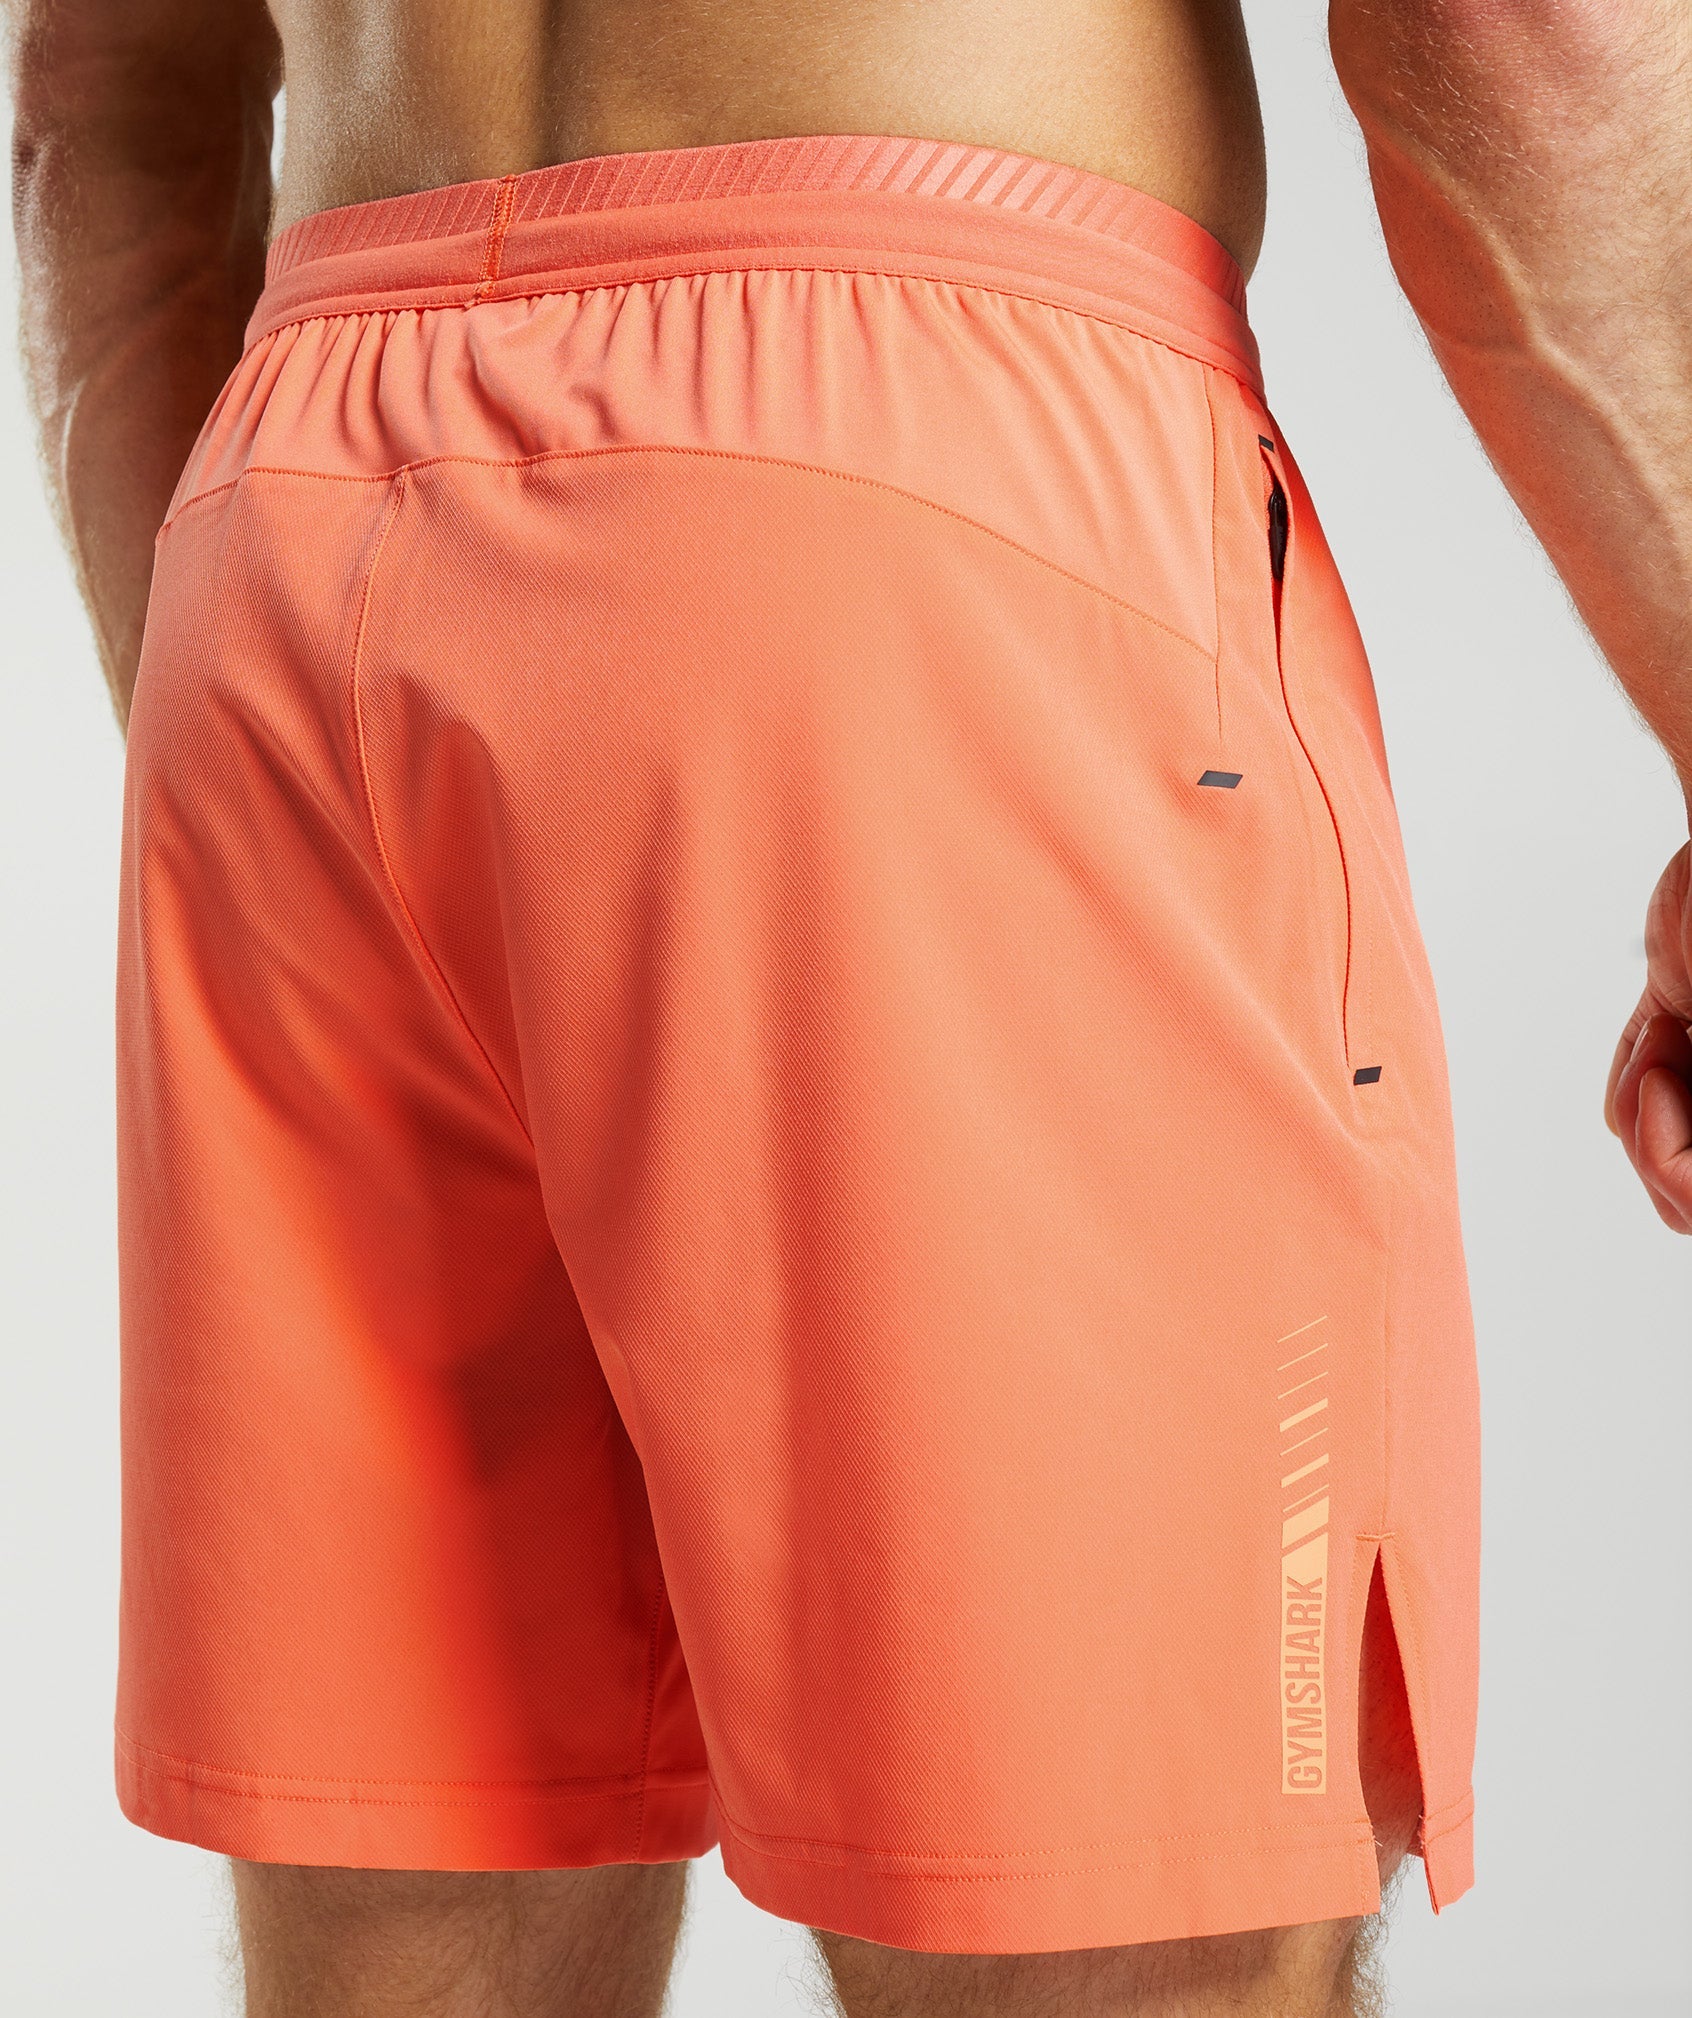 Apex 7" Hybrid Shorts in Solstice Orange - view 6